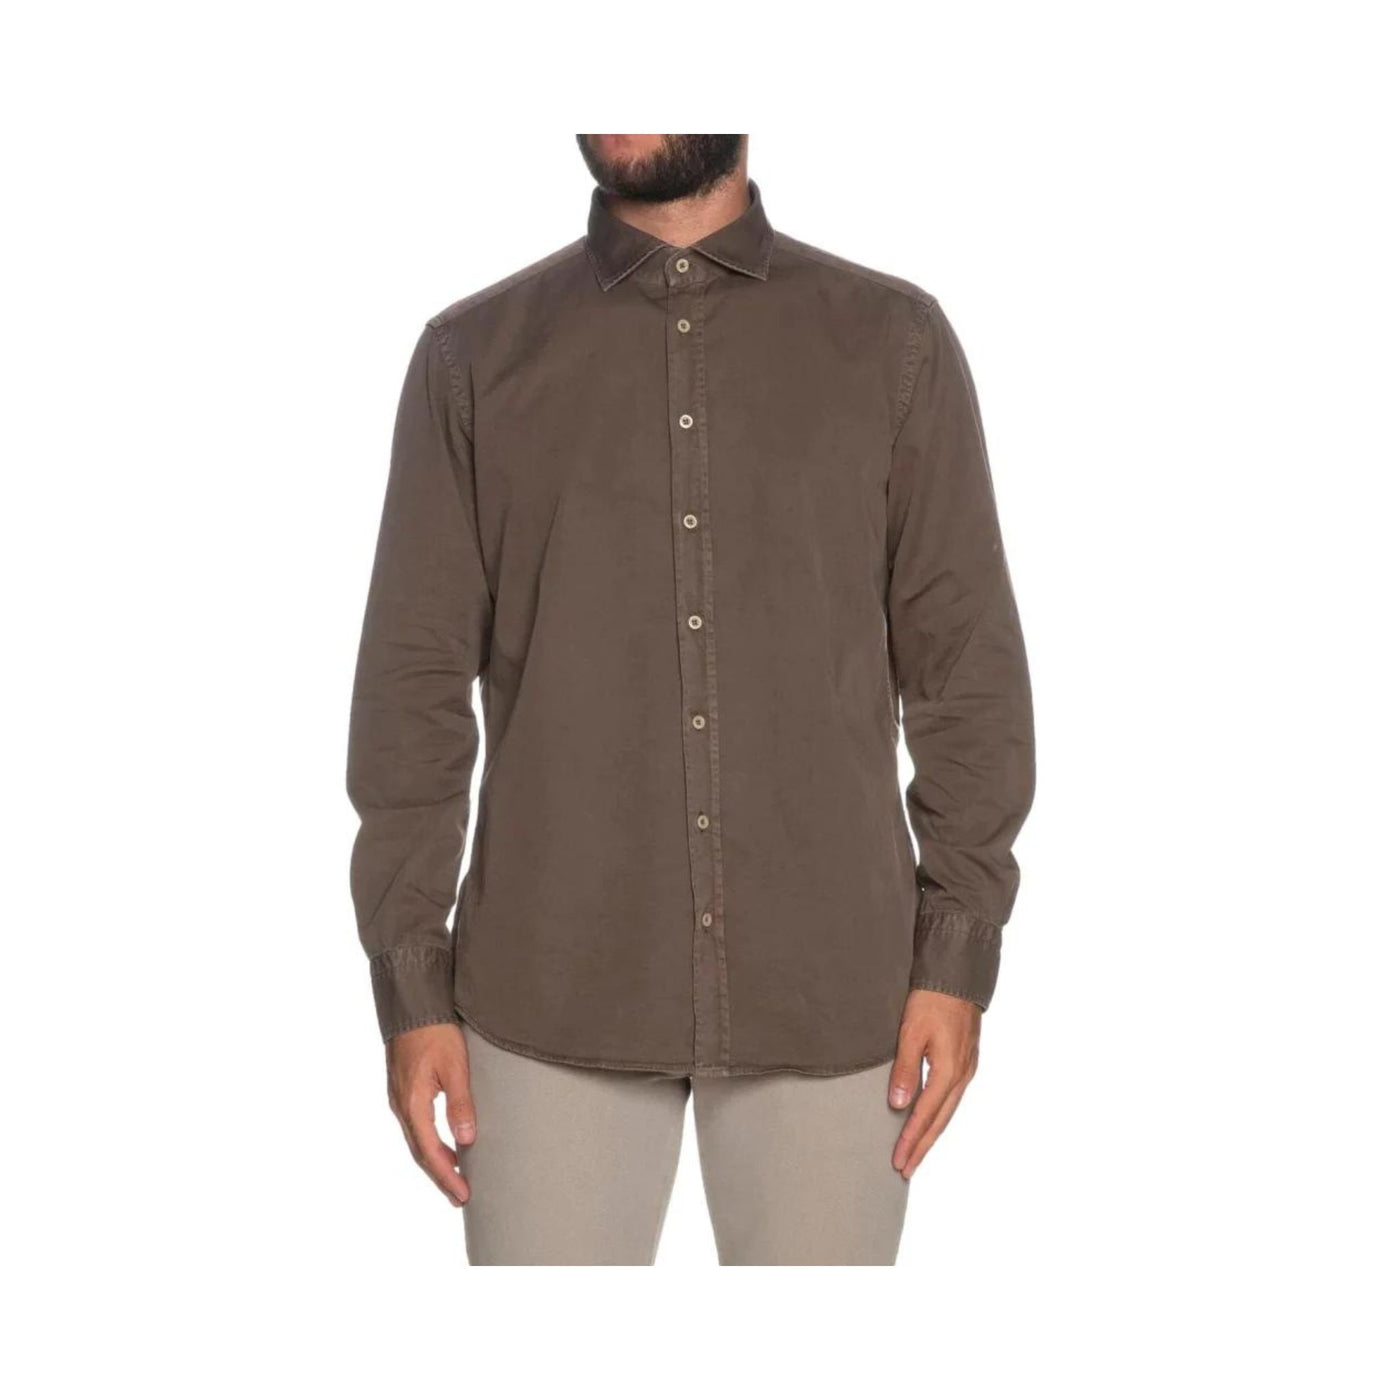 Men's shirt in brown cotton